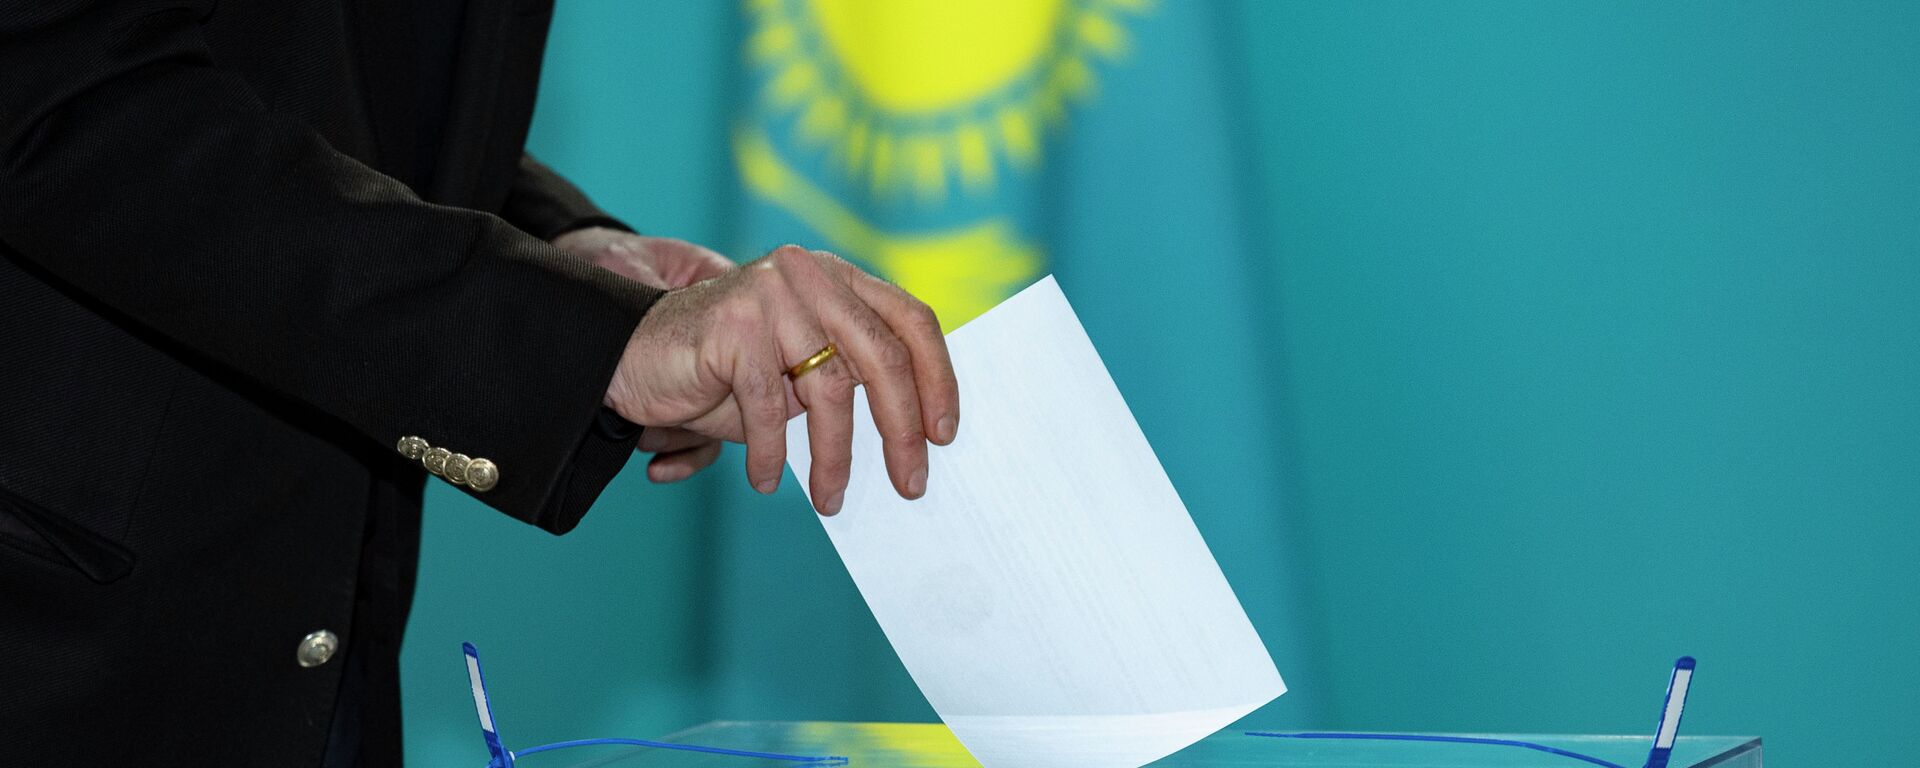 Представители Ассамблеи народа Казахстана голосуют на выборах в мажилис - Sputnik Казахстан, 1920, 26.12.2022